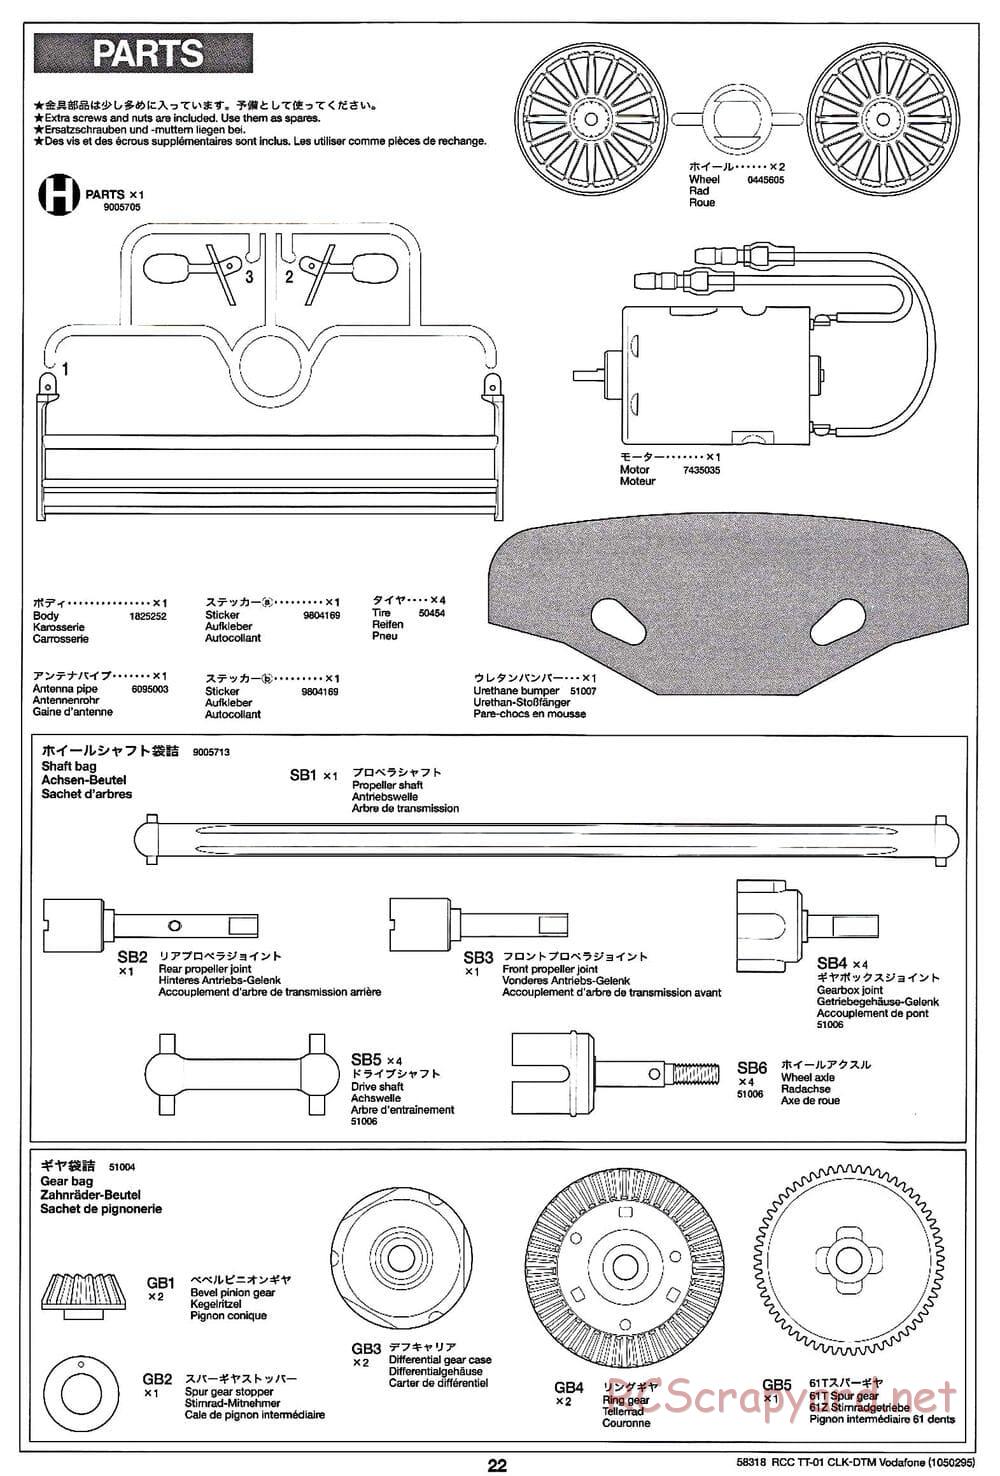 Tamiya - Mercedes-Benz CLK-DTM Team Vodafone AMG-Mercedes - TT-01 Chassis - Manual - Page 22